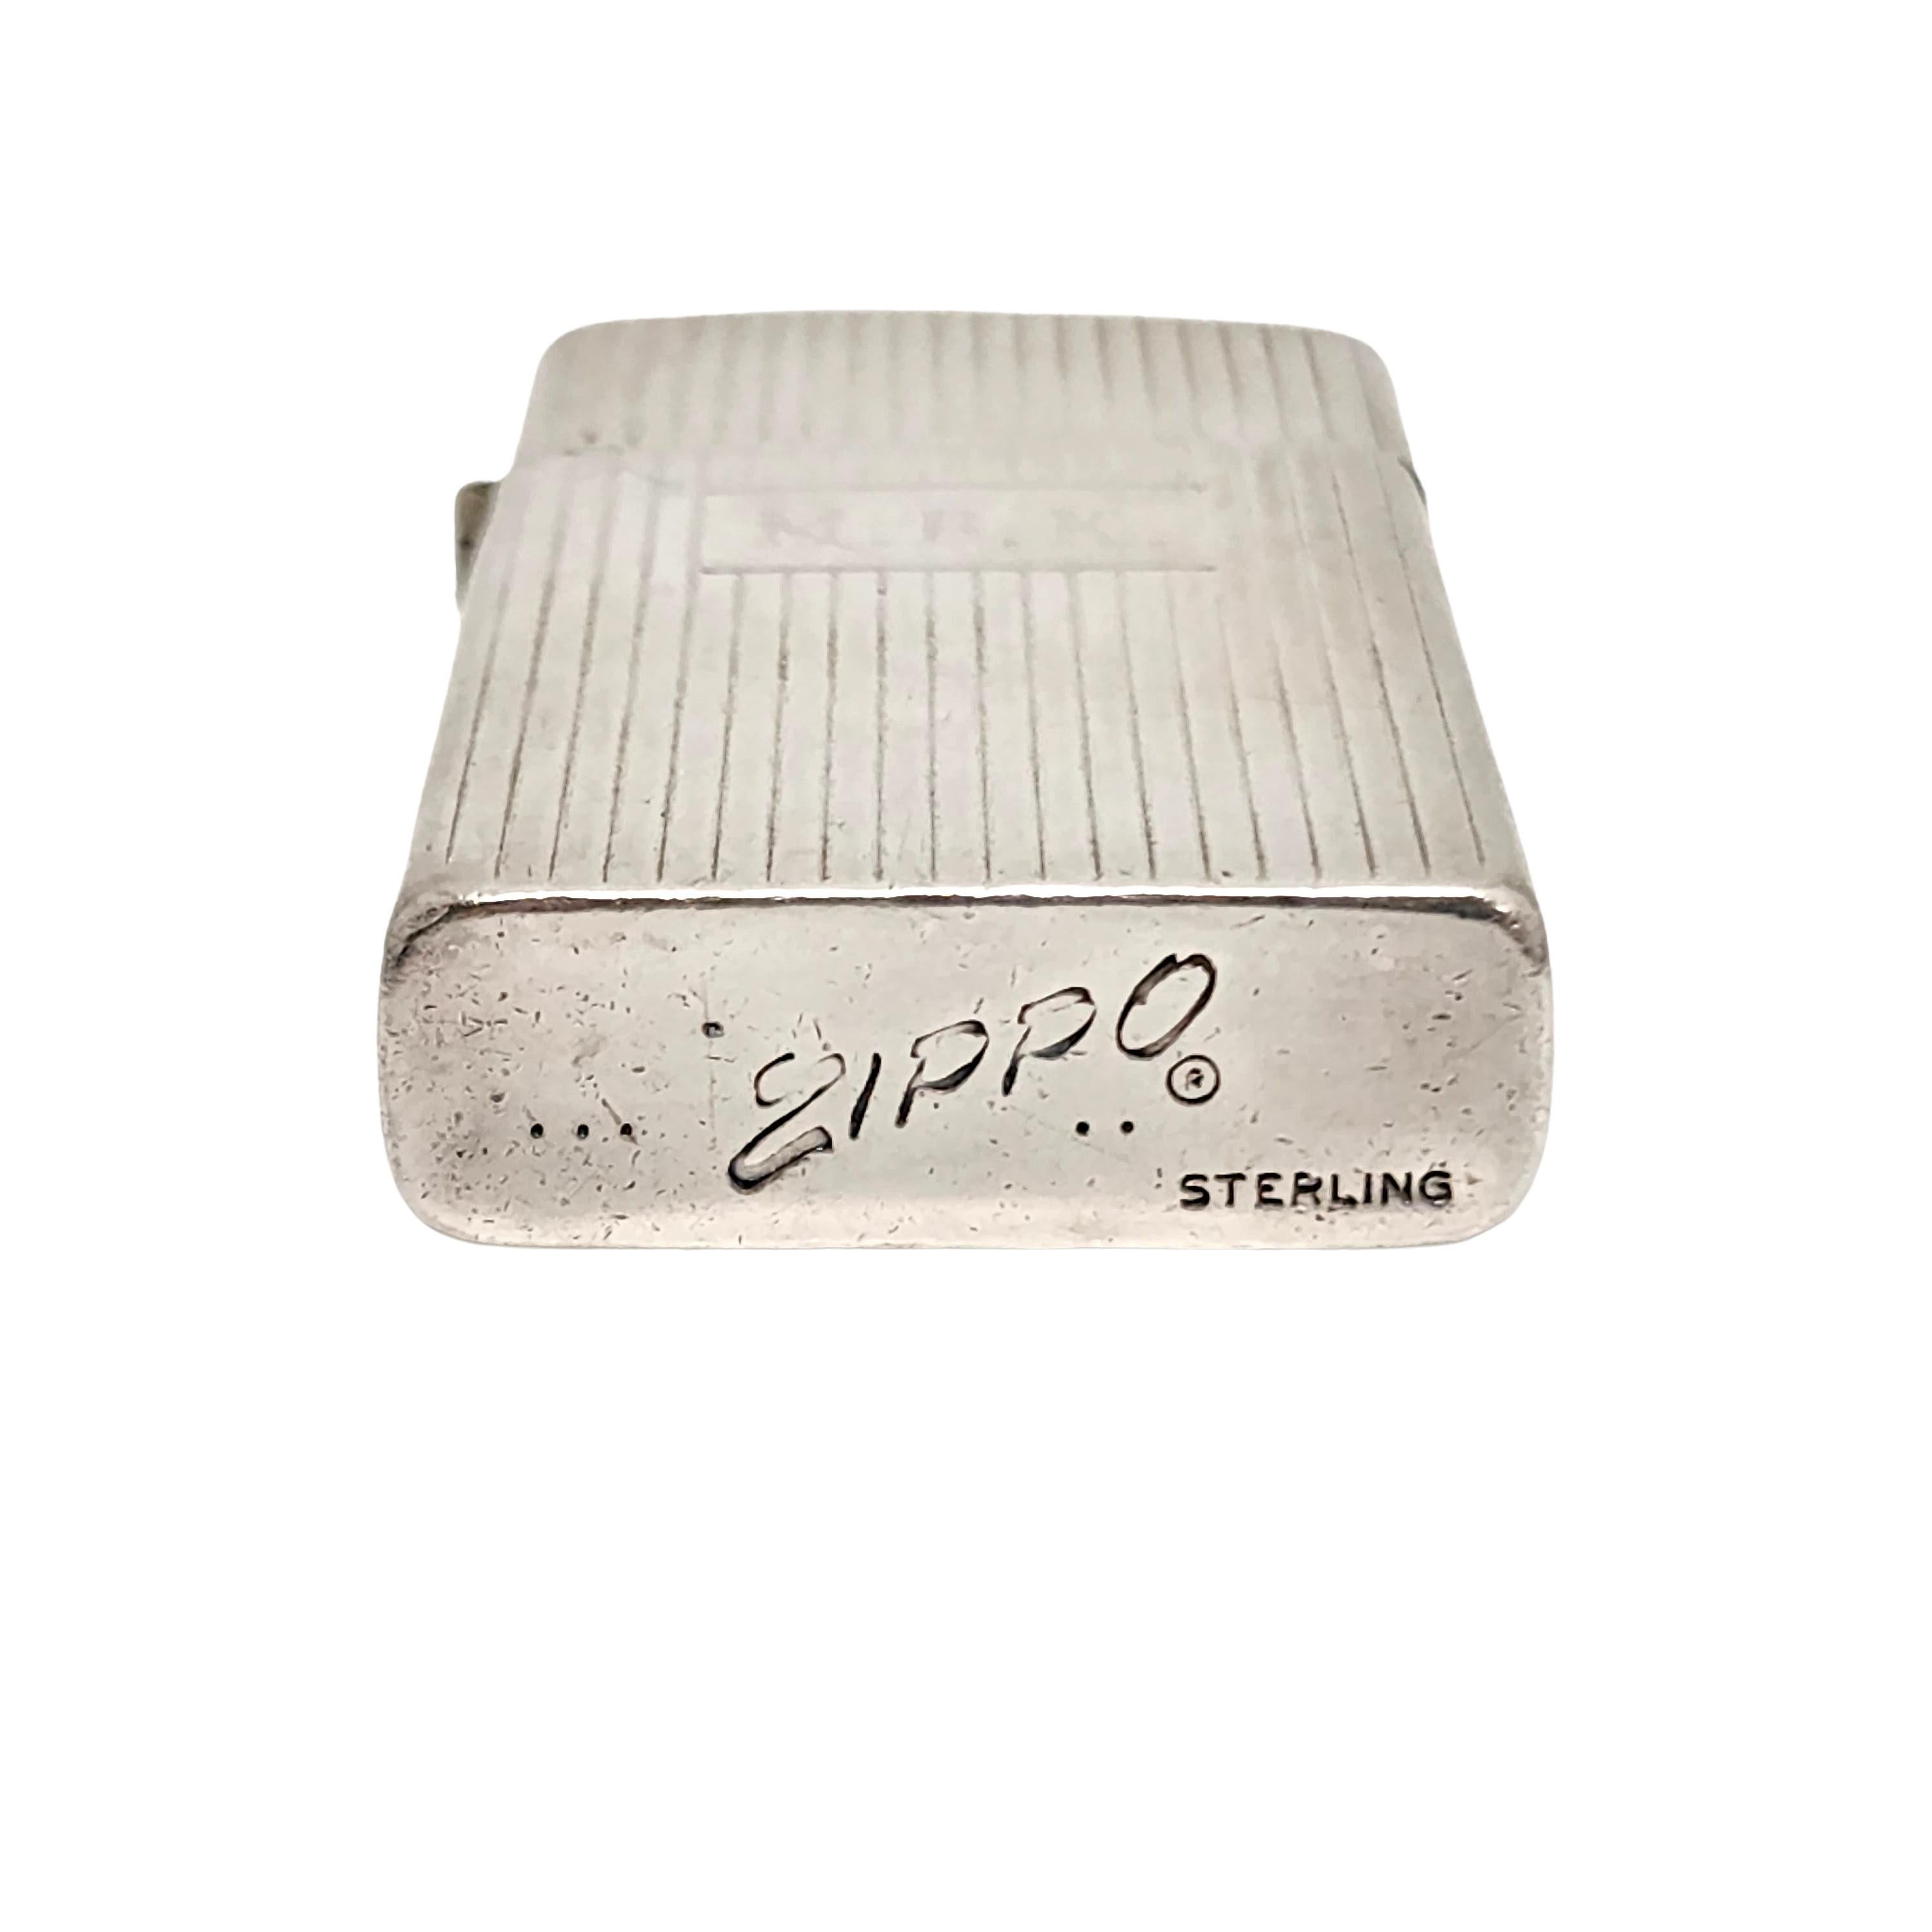 Zippo Sterling Silver Engine Turned Slim Lighter Case Holder w/ Monogram #13040 For Sale 12